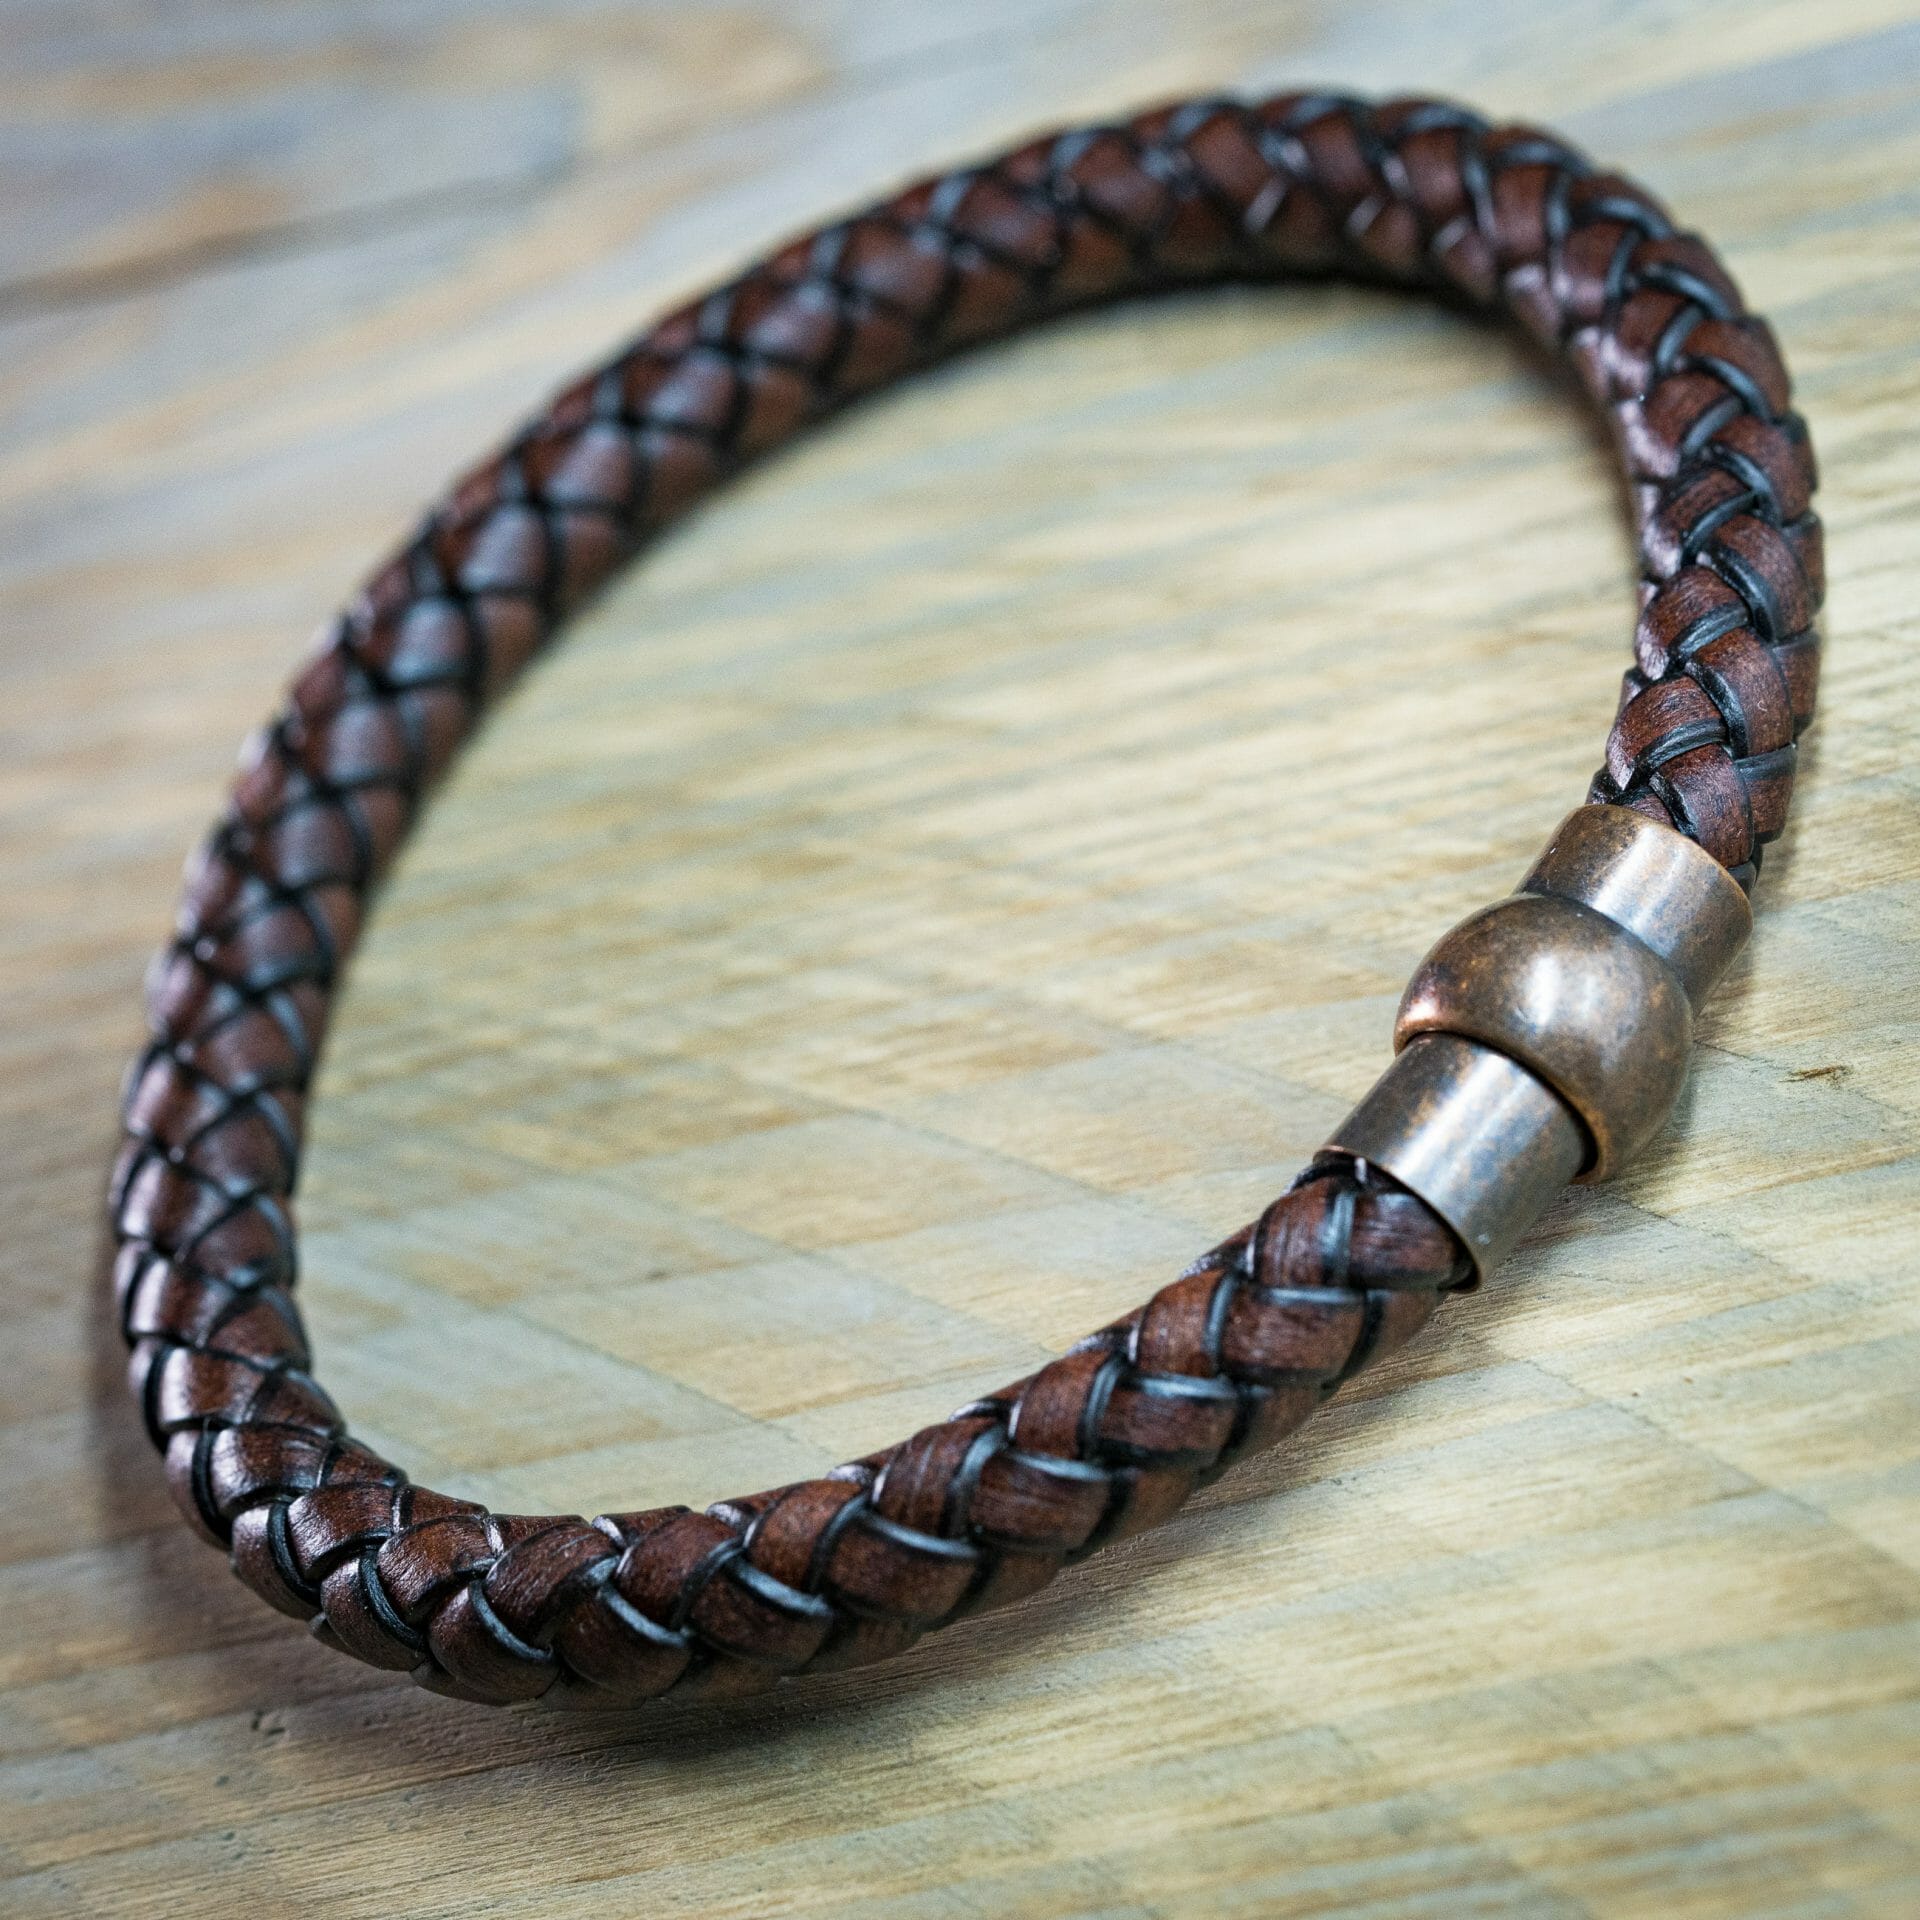 Copper Viking bracelet - Woven brown leather